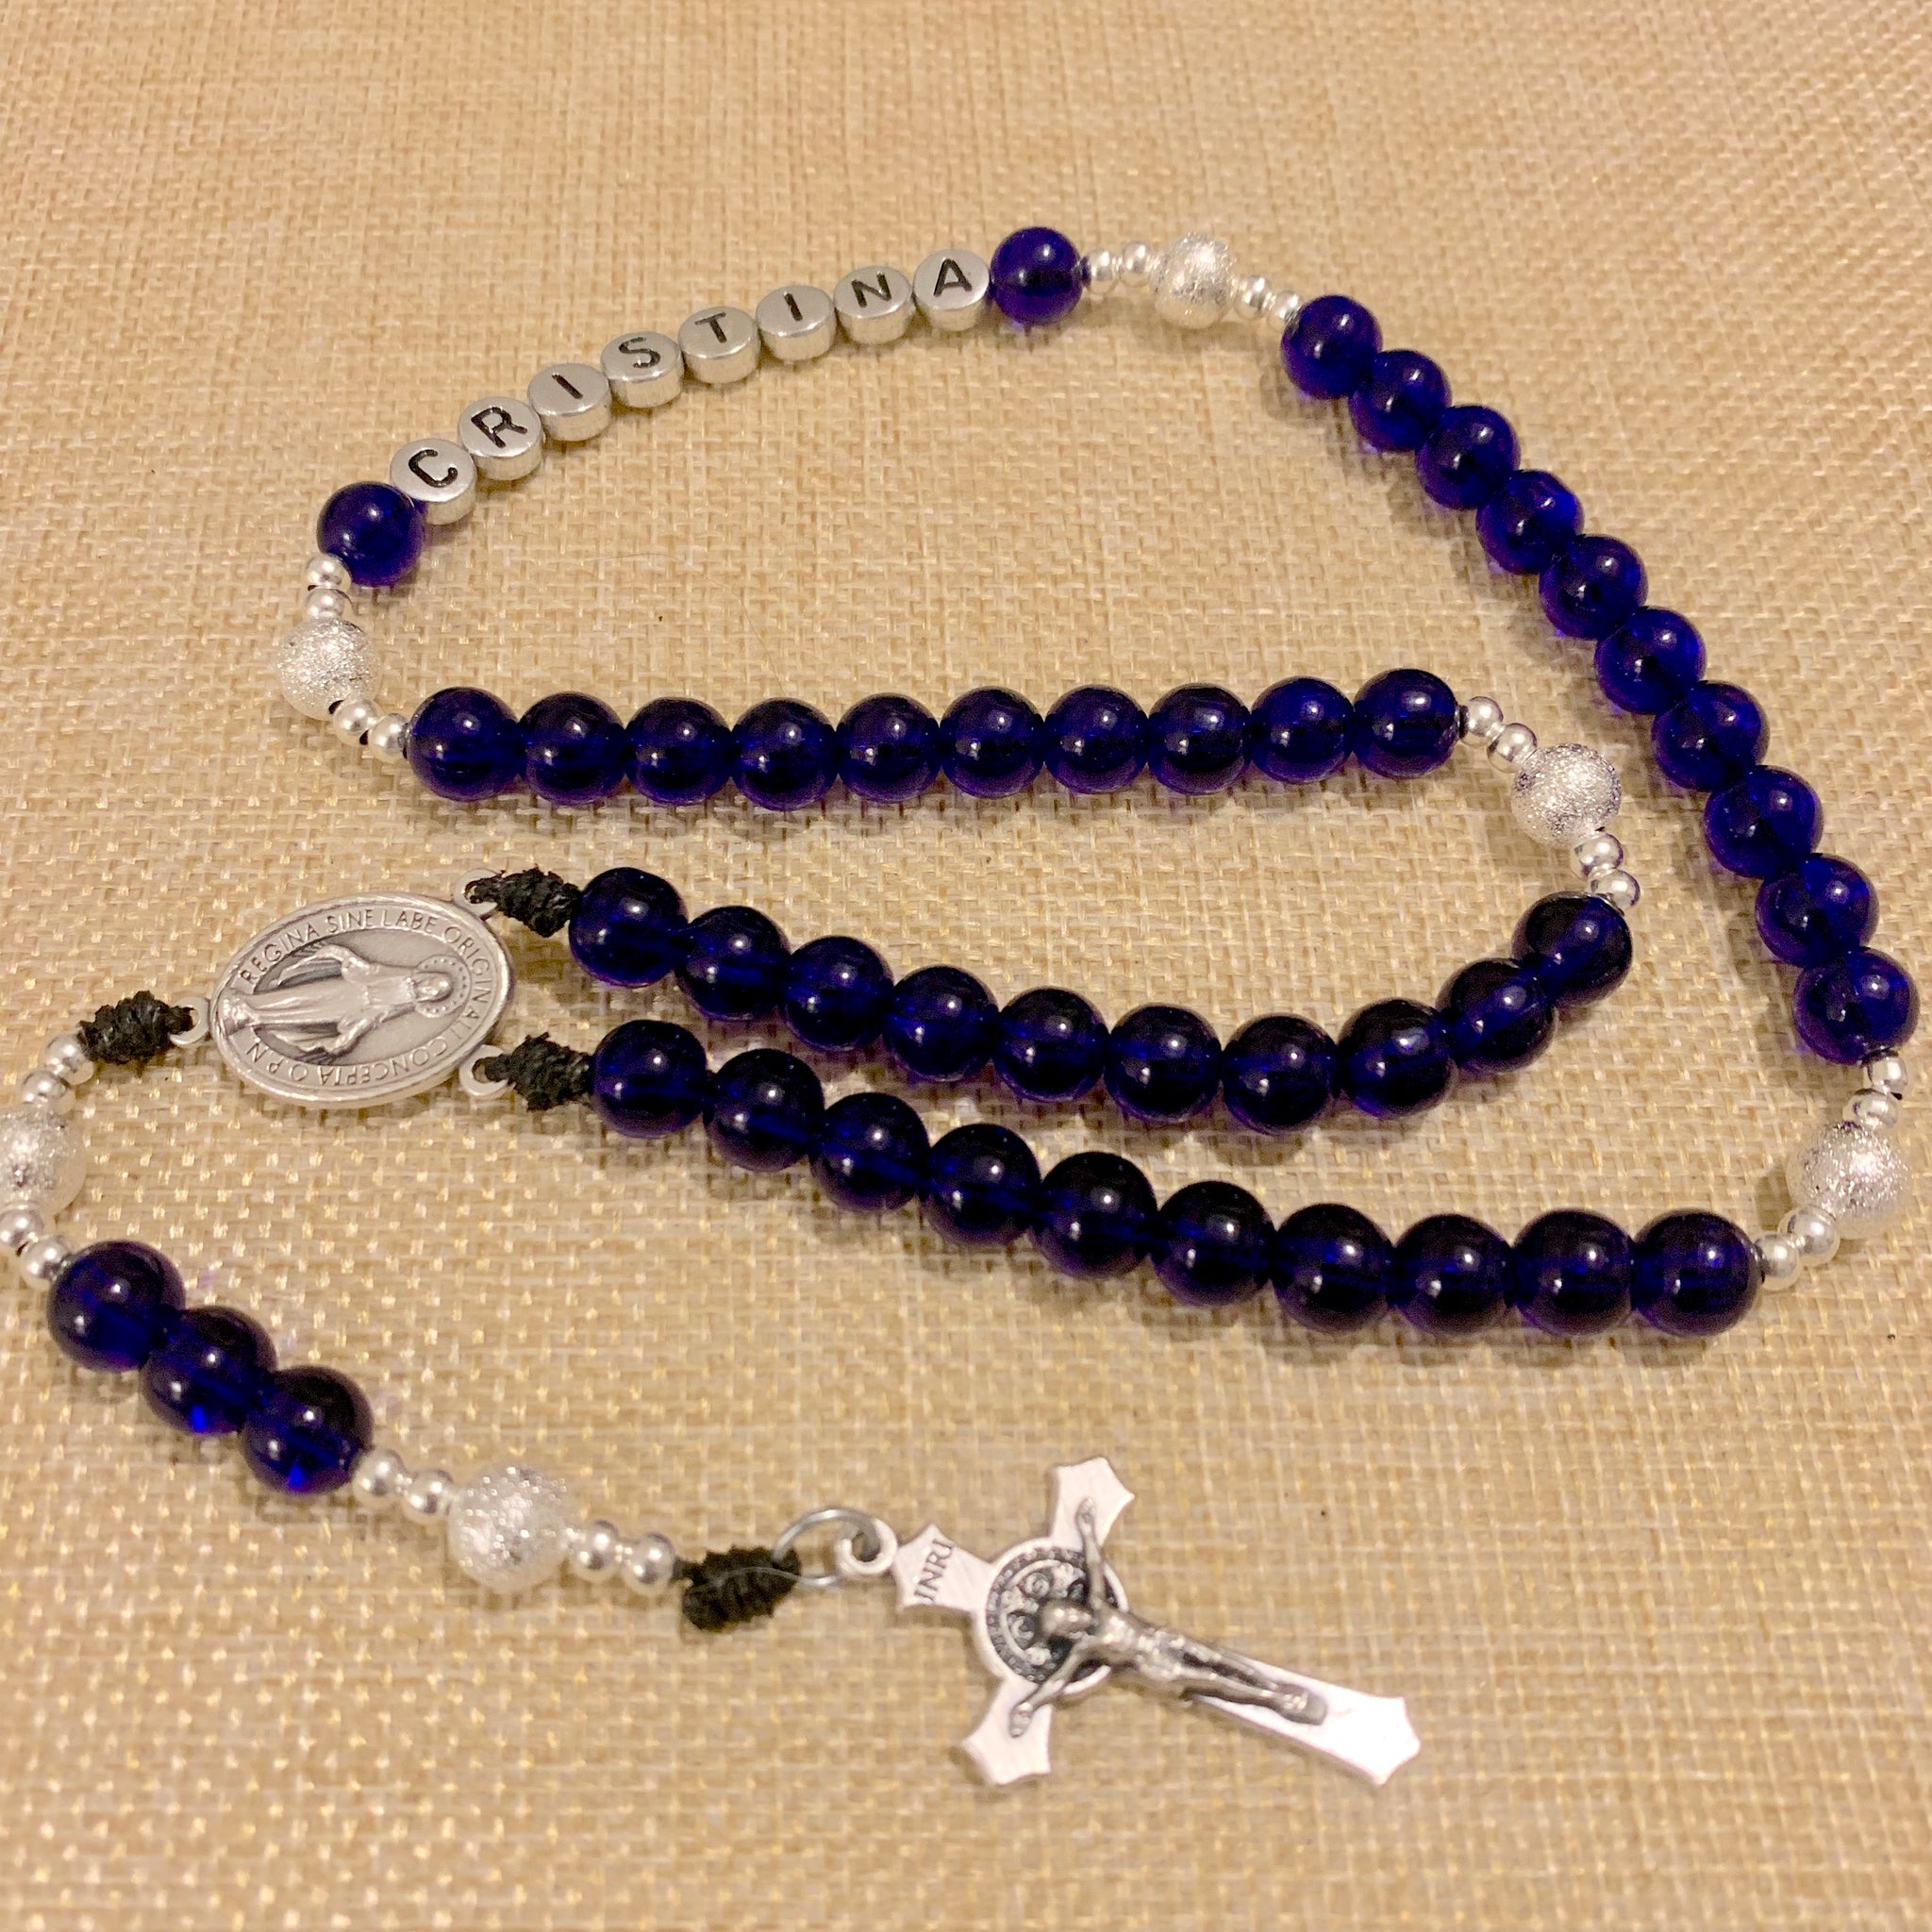 journey deeper sunday rosary